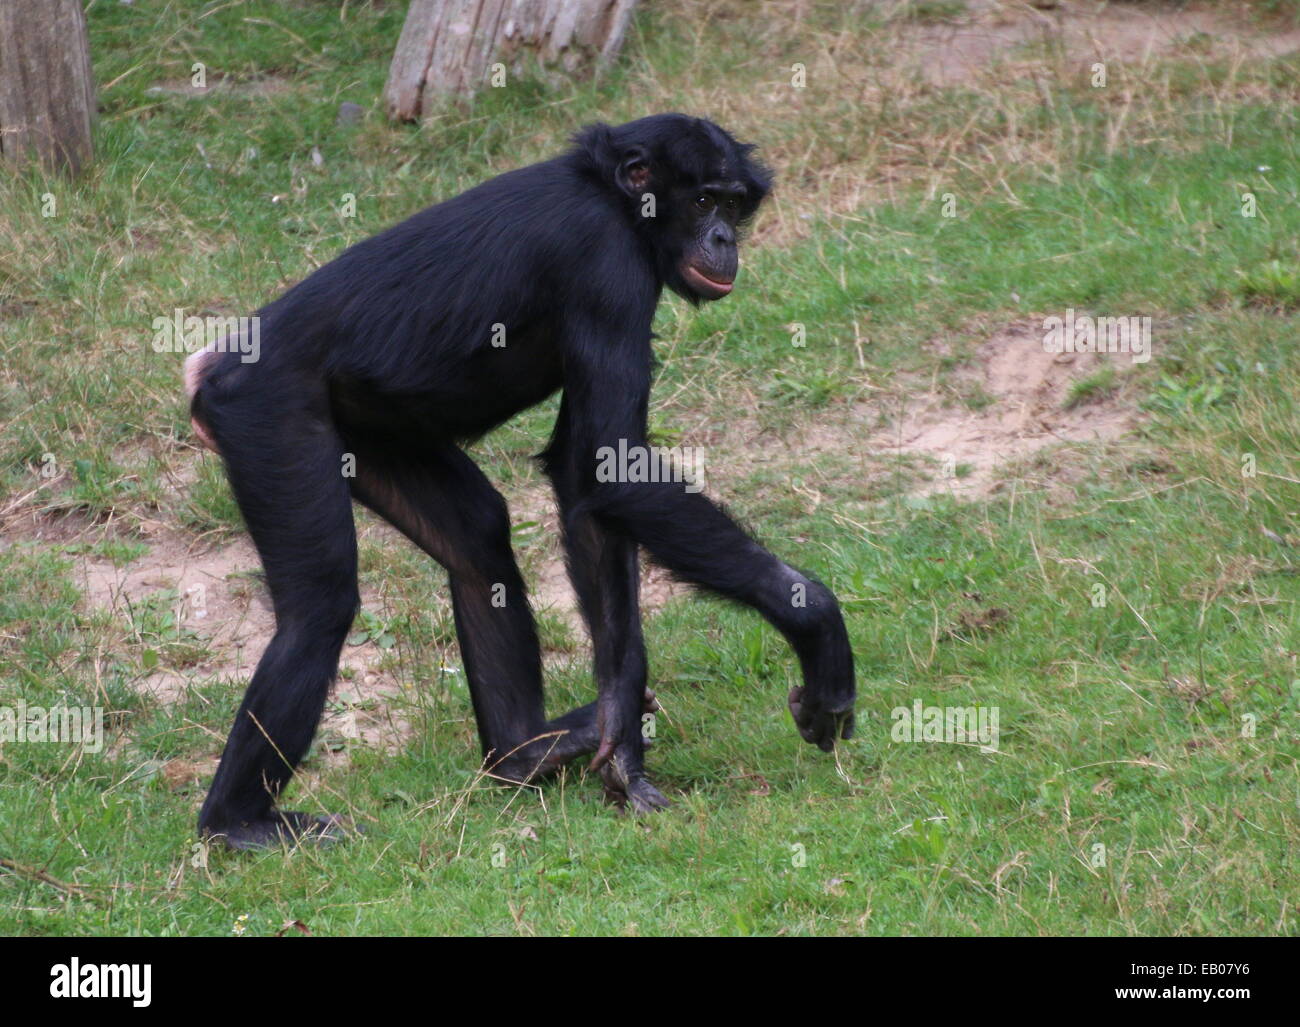 Maduros (anteriormente) el bonobo o chimpancé pigmeo (Pan paniscus) en un entorno natural Foto de stock